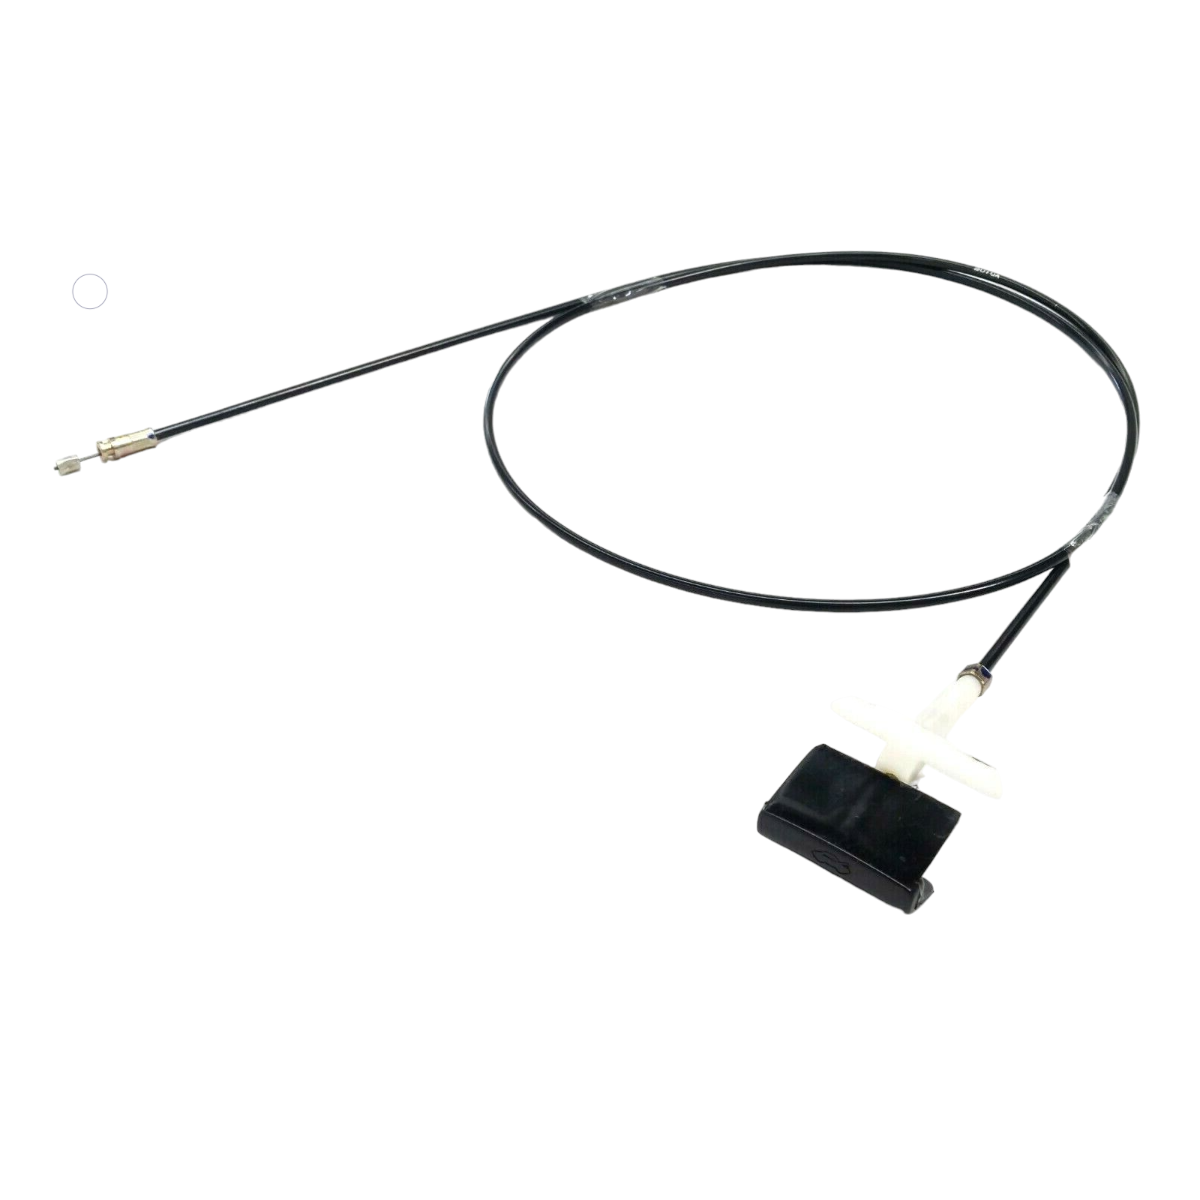 Bonnet Hood Release Cable for NISSAN DATSUN 1600 510 SEDAN WAGON